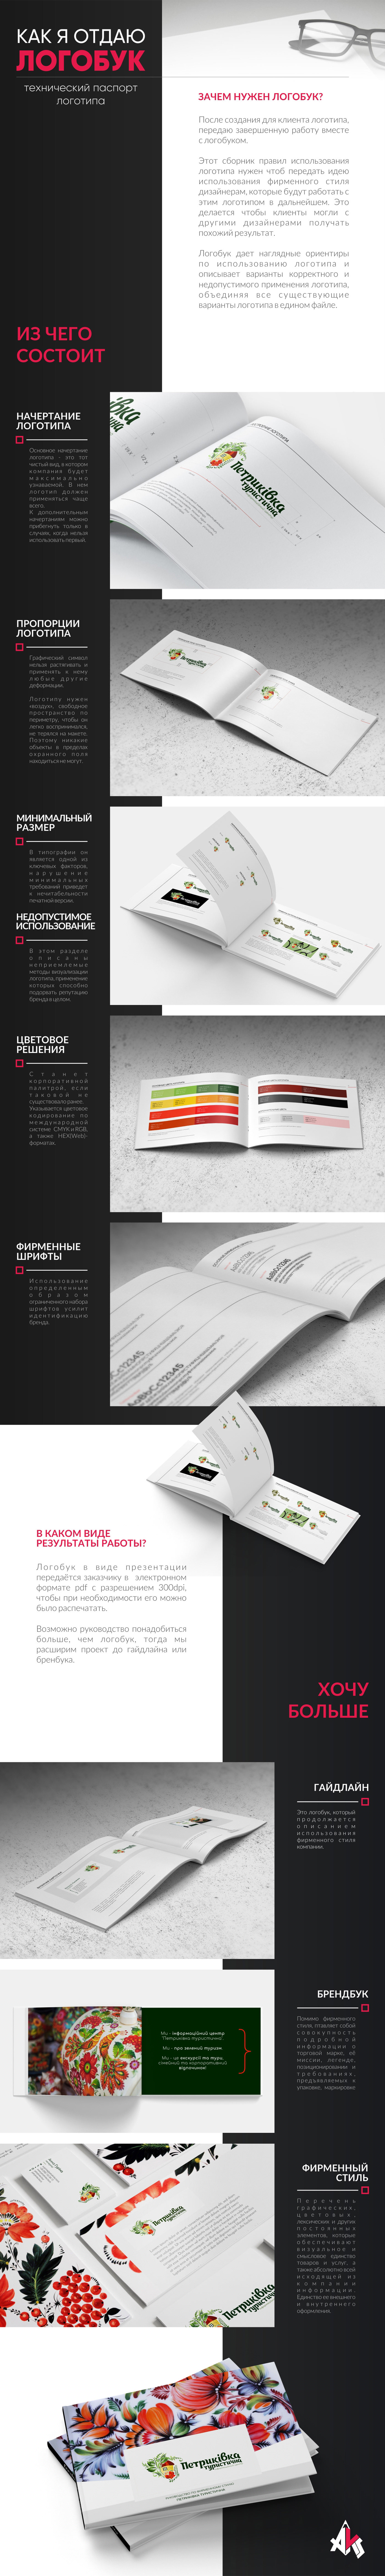 logo brand brandbook logobook identity guideline брендбук гайдлайн логобук фирменный стиль